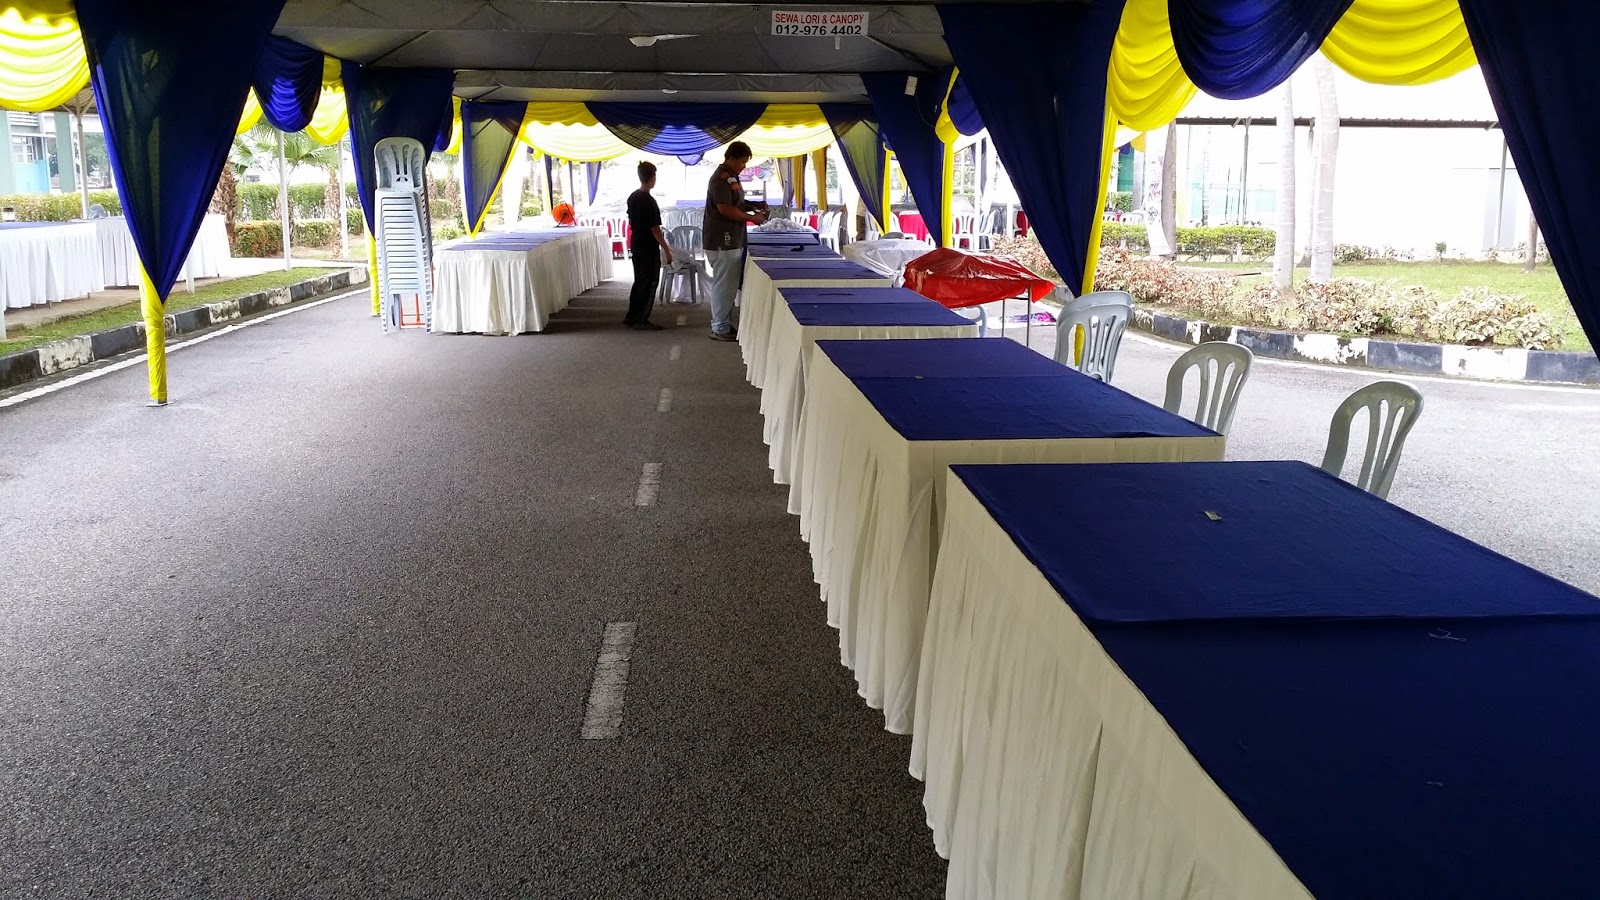 Sewa Meja & Kerusi Untuk Majlis | Events Chairs, Tables To Rent